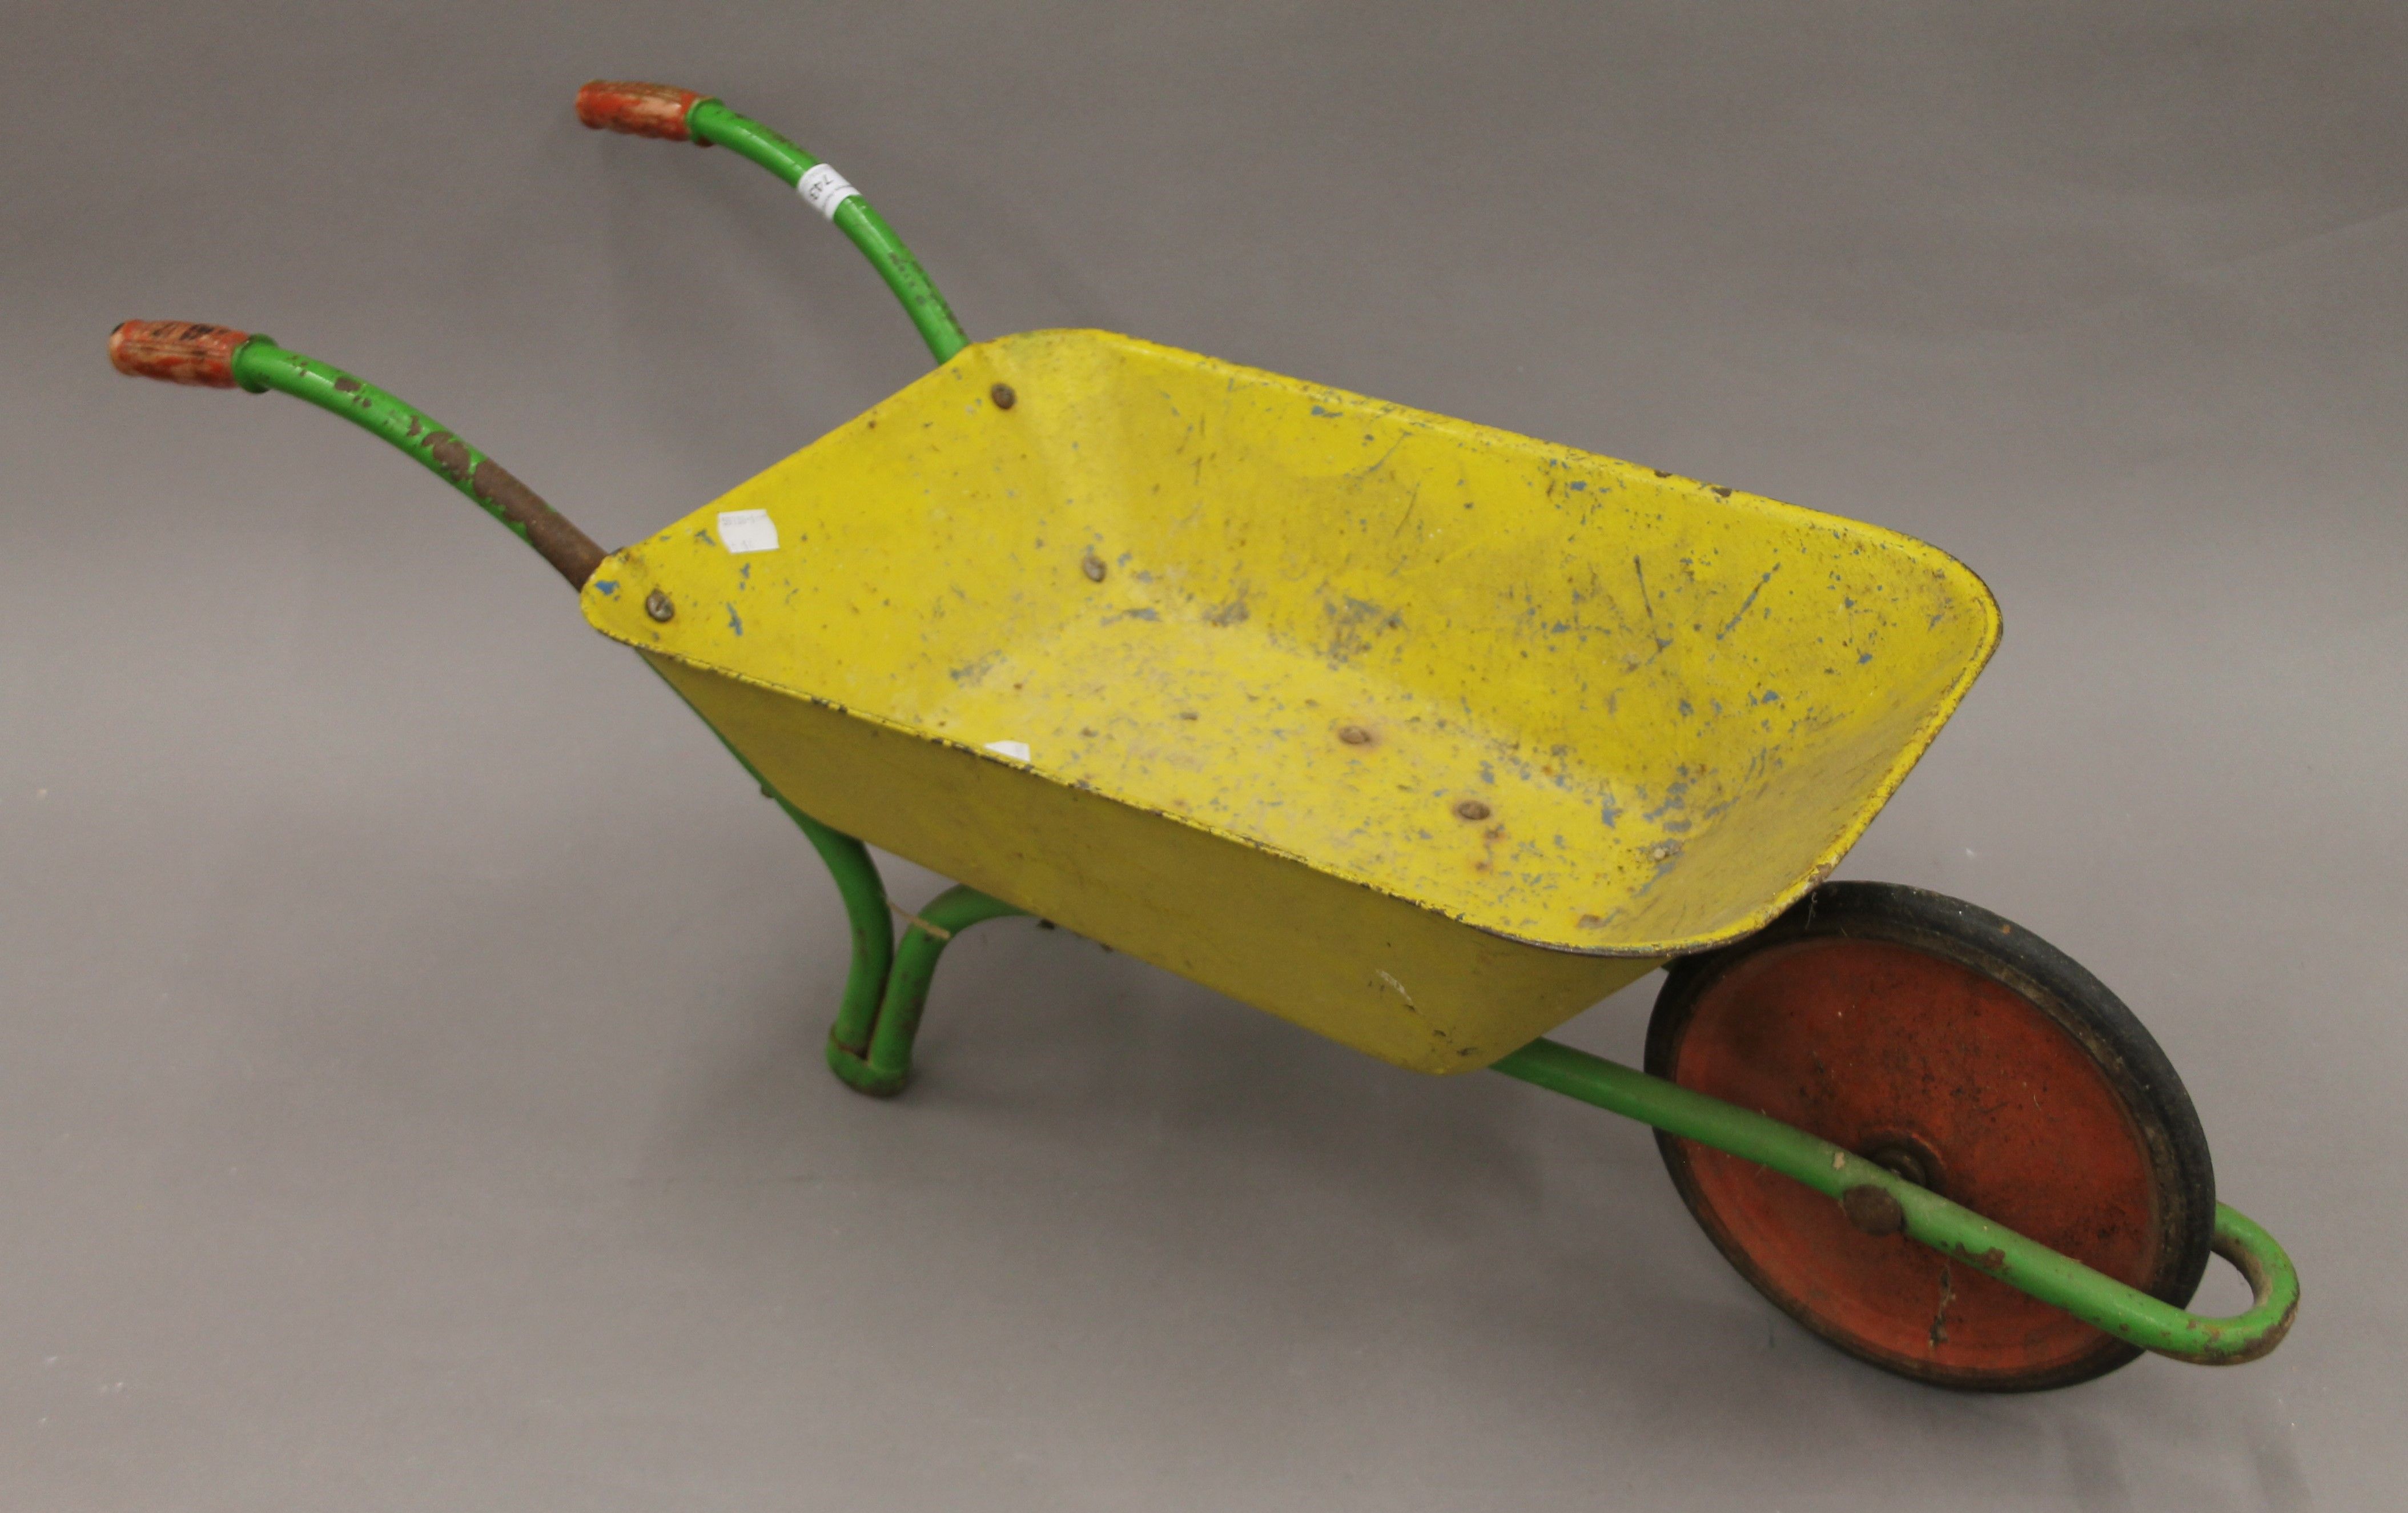 A vintage child's wheelbarrow. 82 cm long.